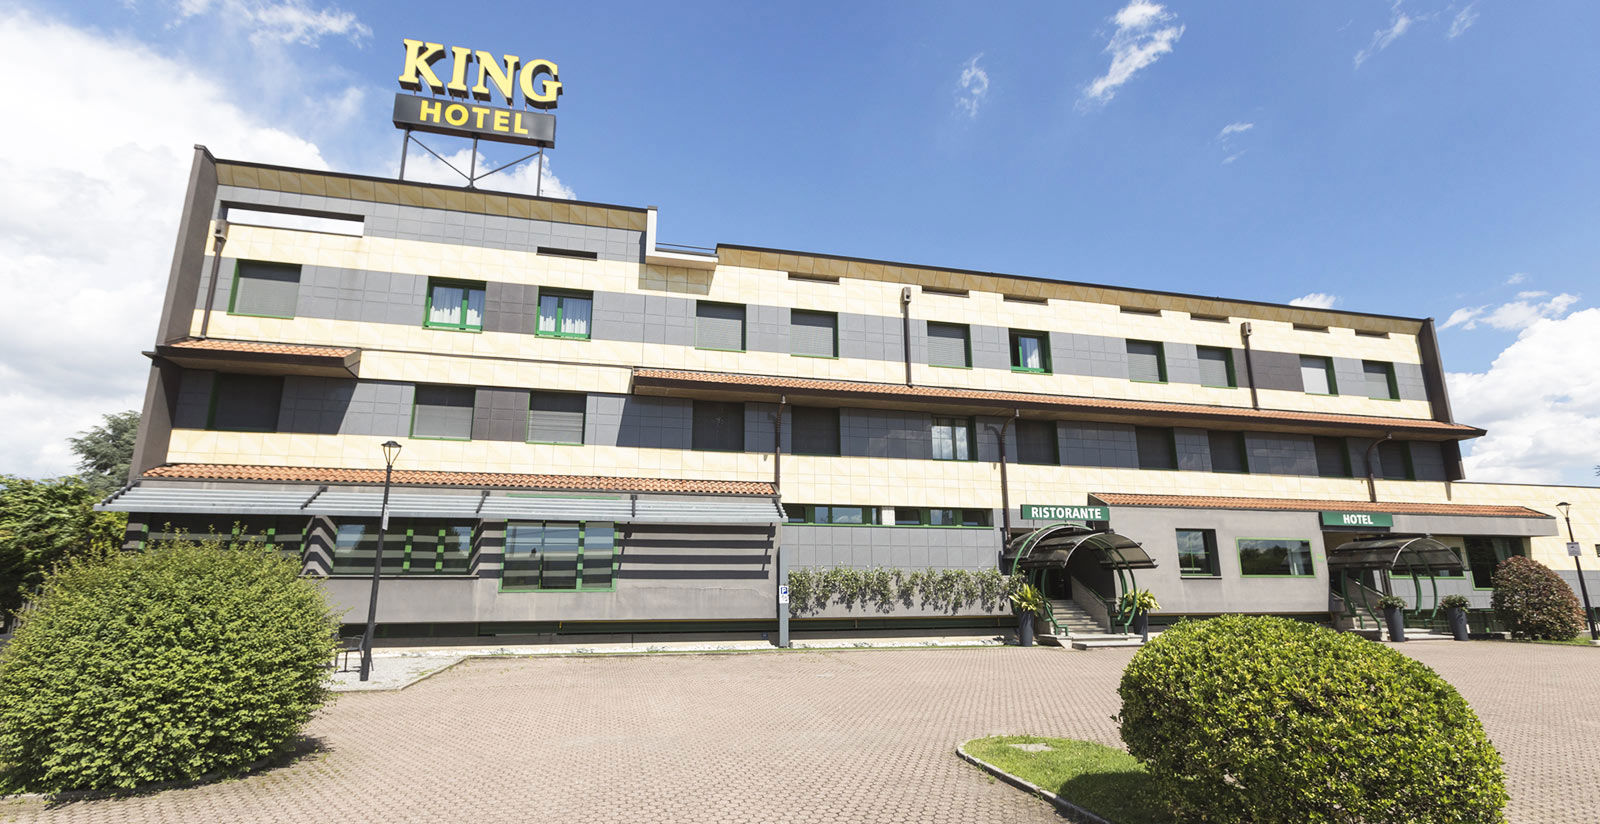 Hotel King - Gds codes 2